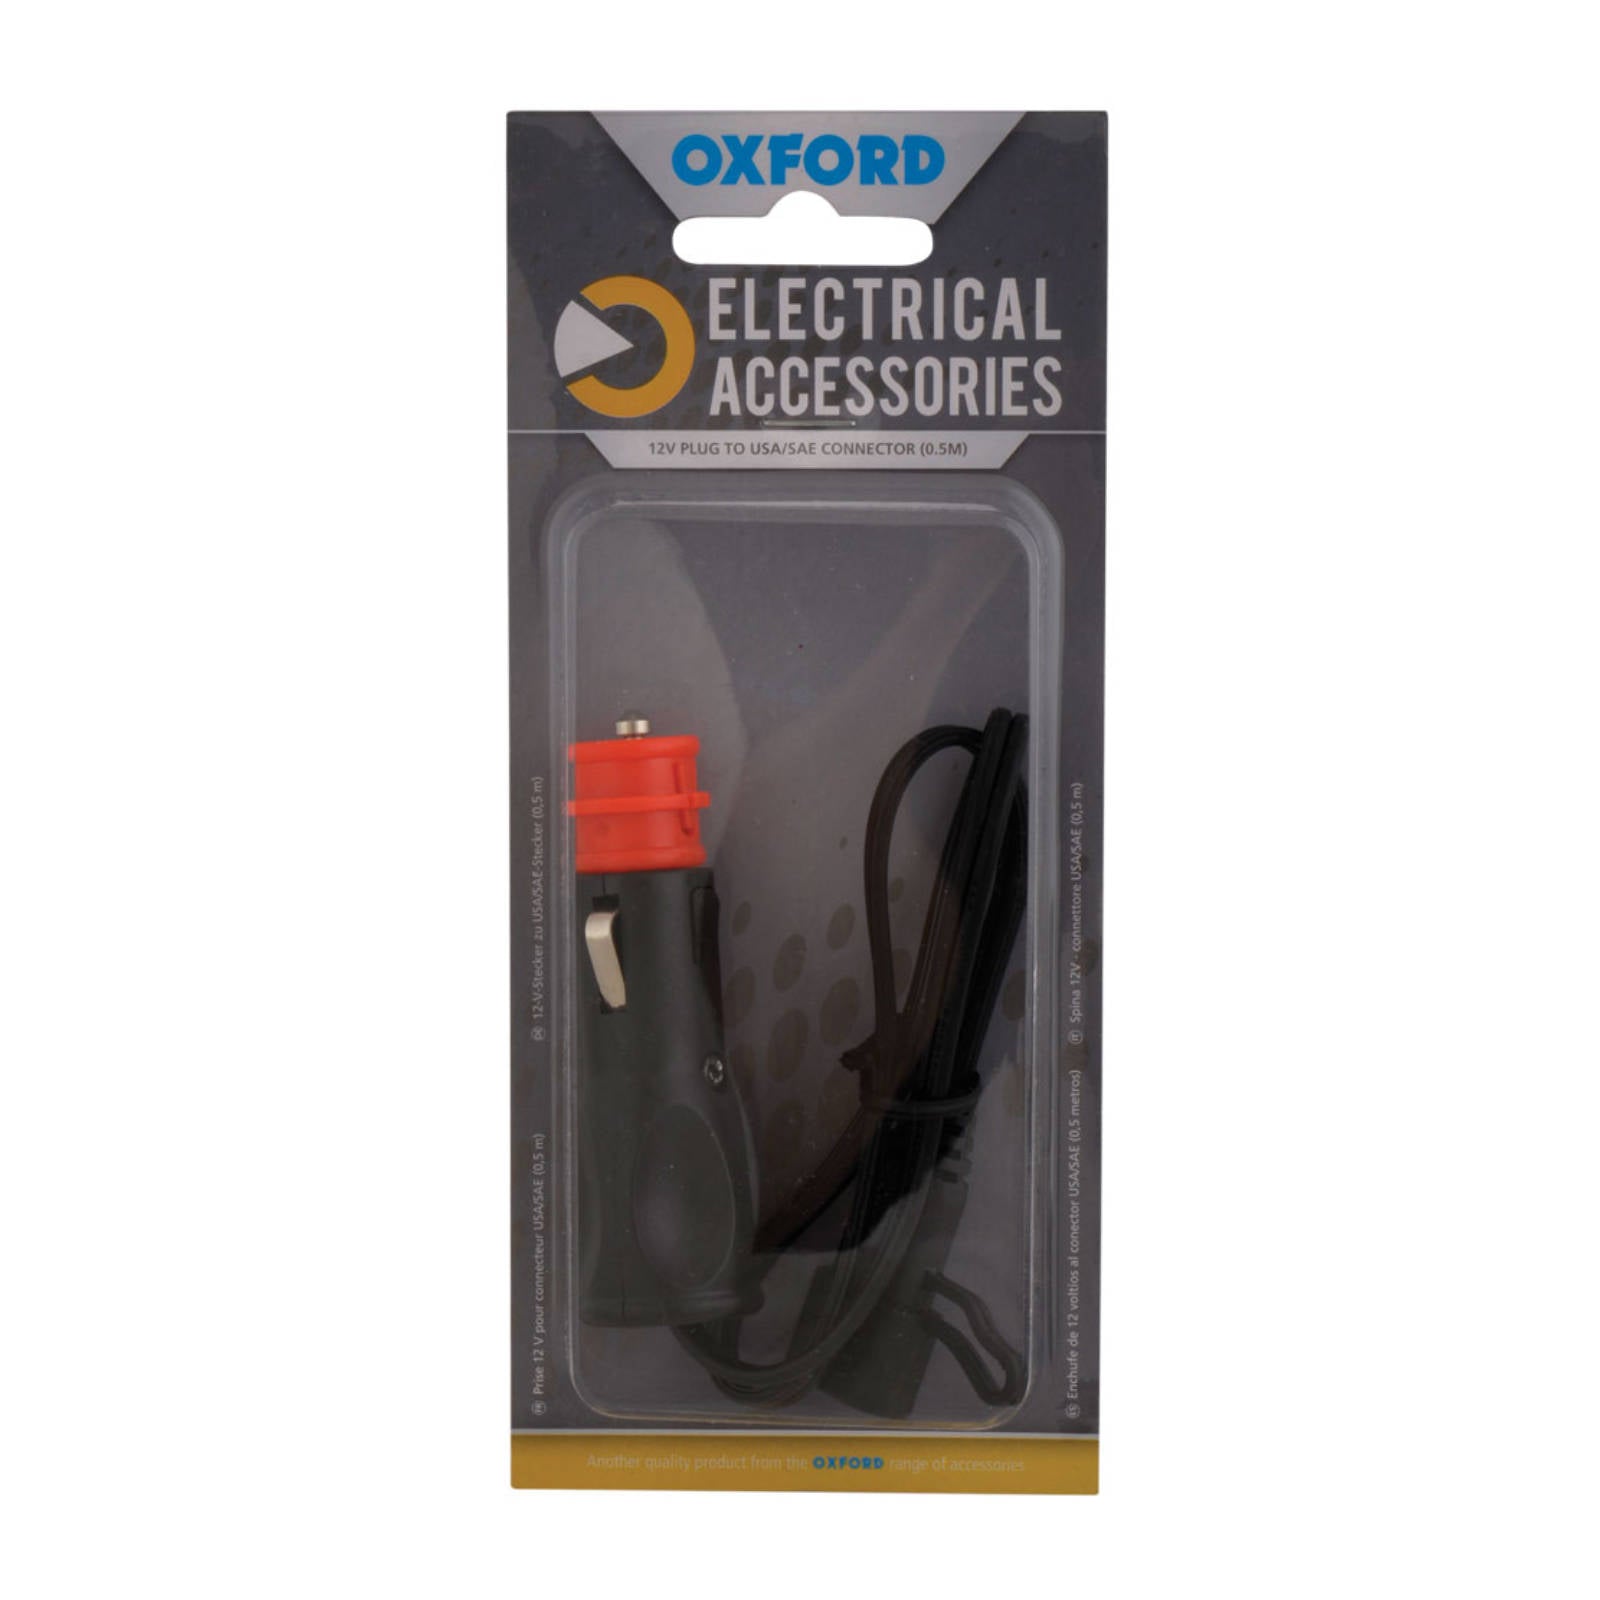 Oxford 12 Volt Plug to USA/SAE Connector (0.5m Lead) – Oxford Australia